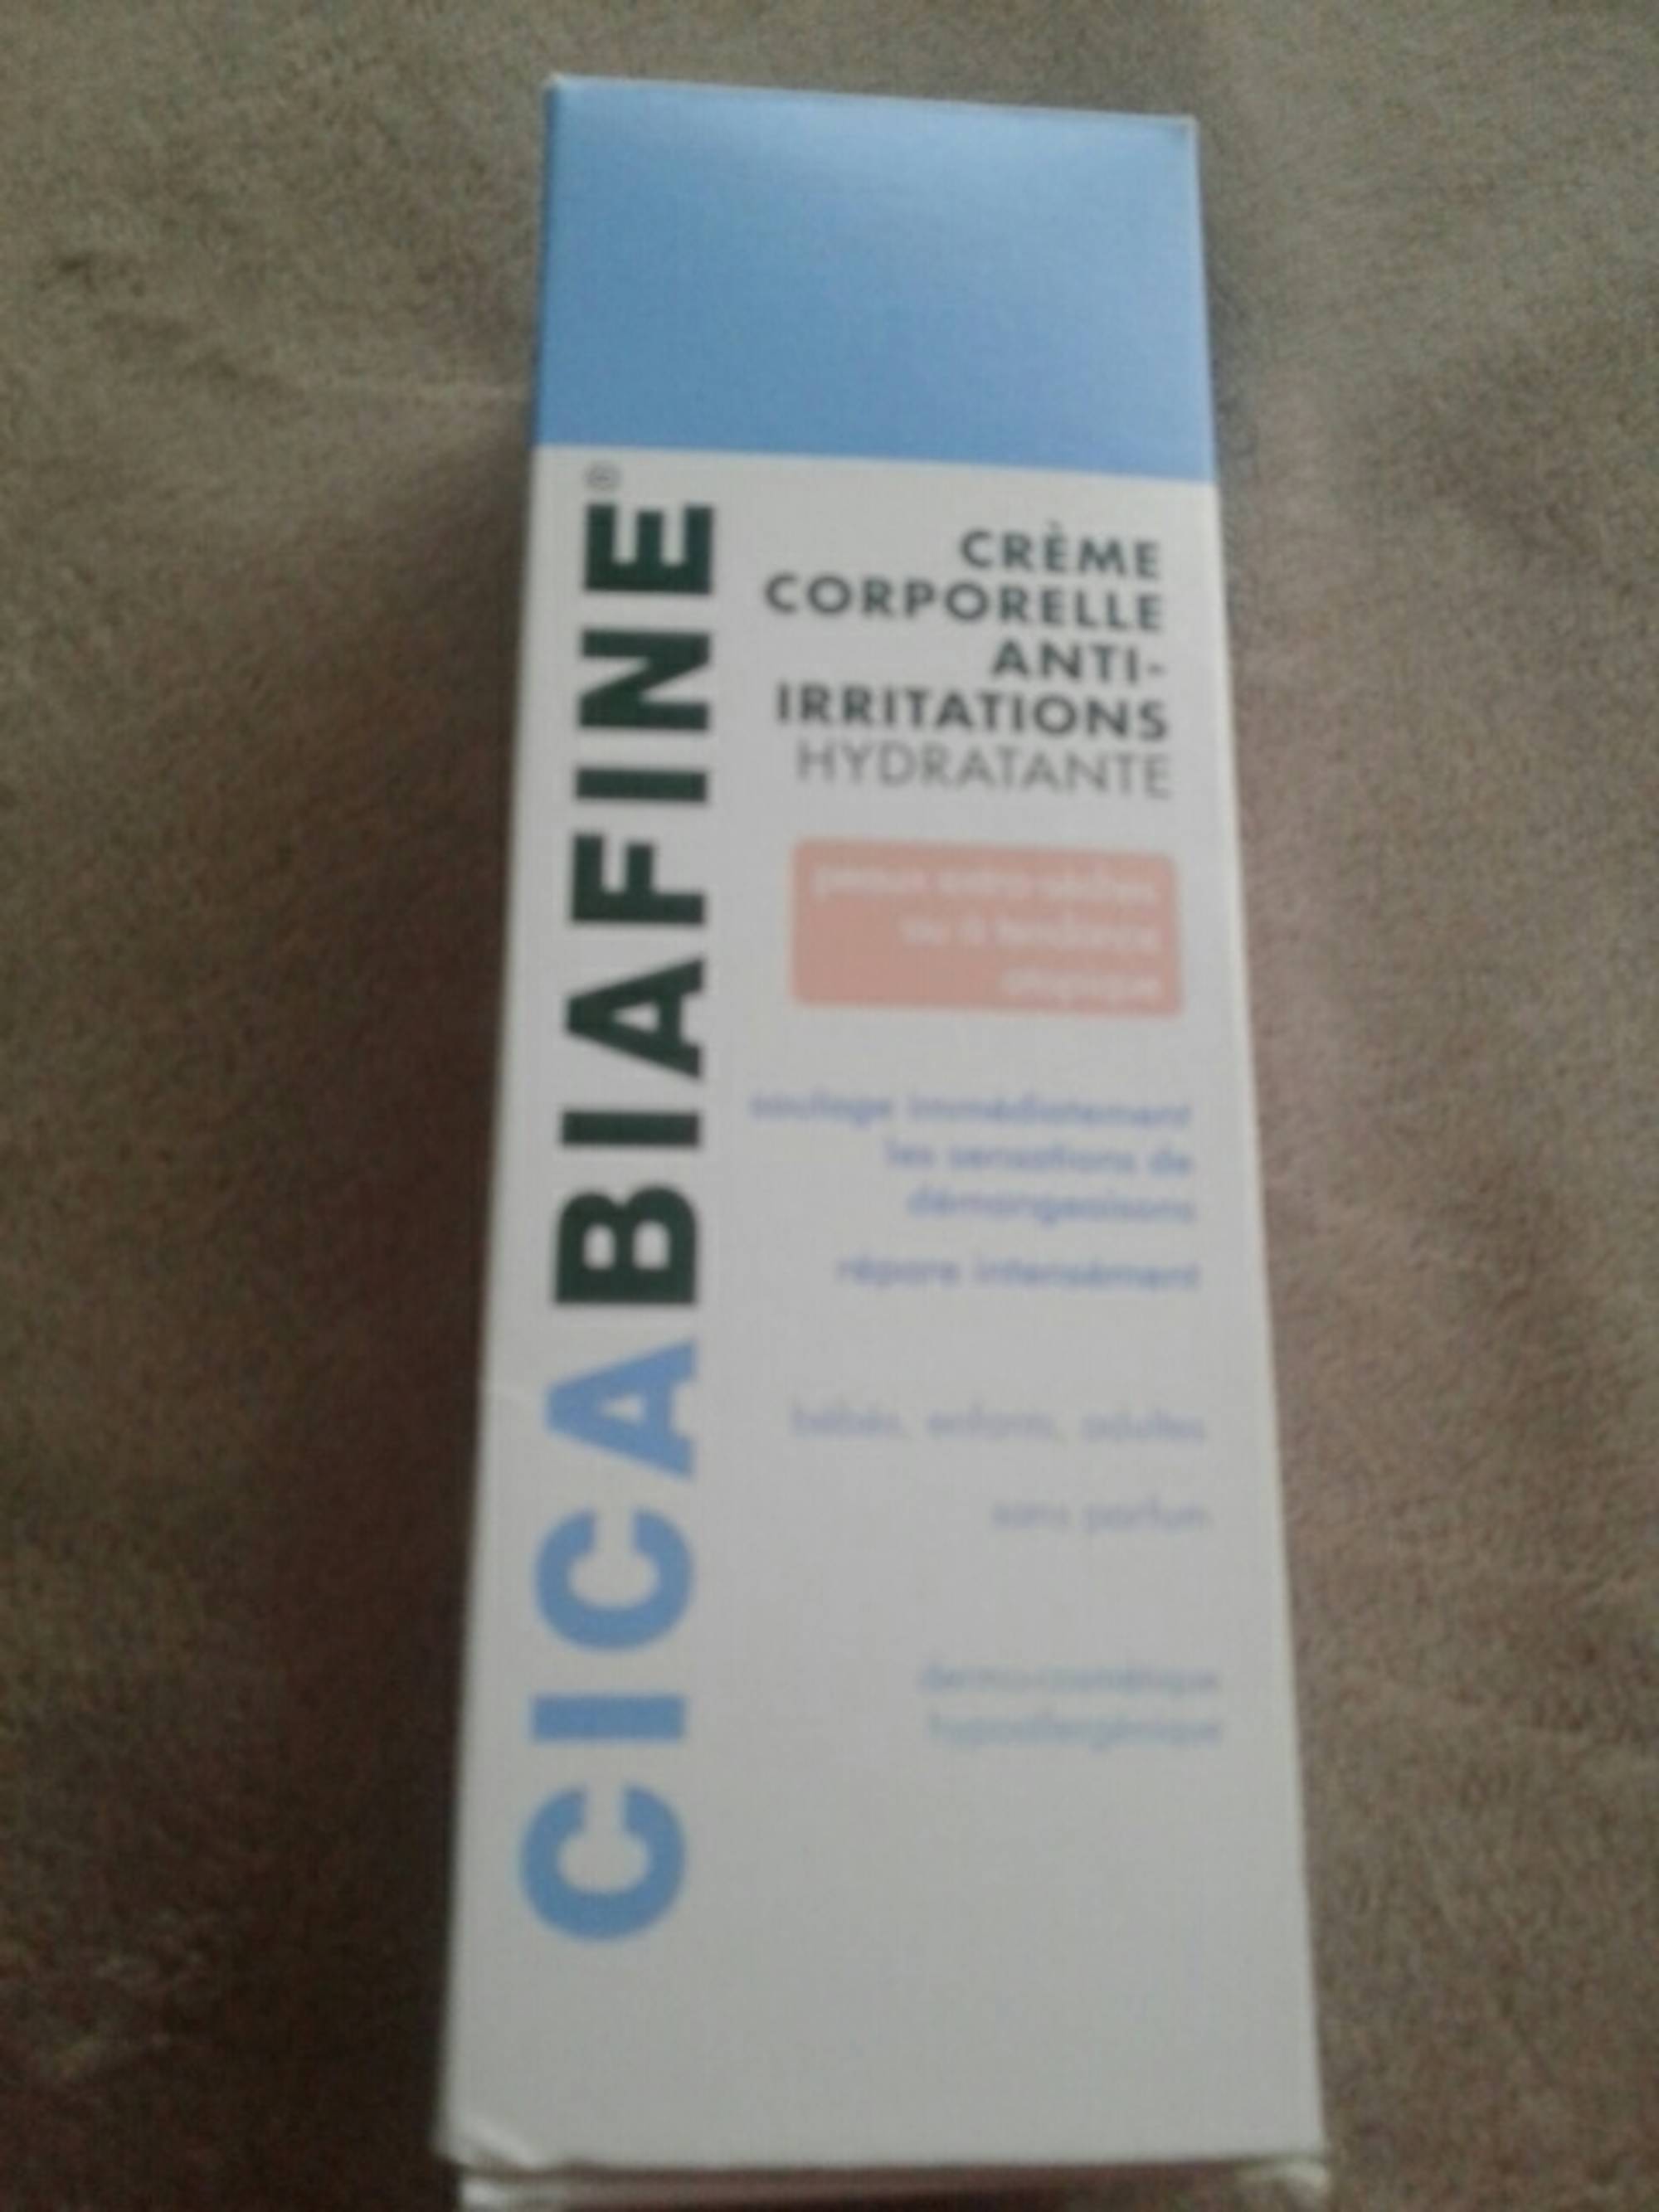 Composition CICABIAFINE Crème corporelle anti-irritations